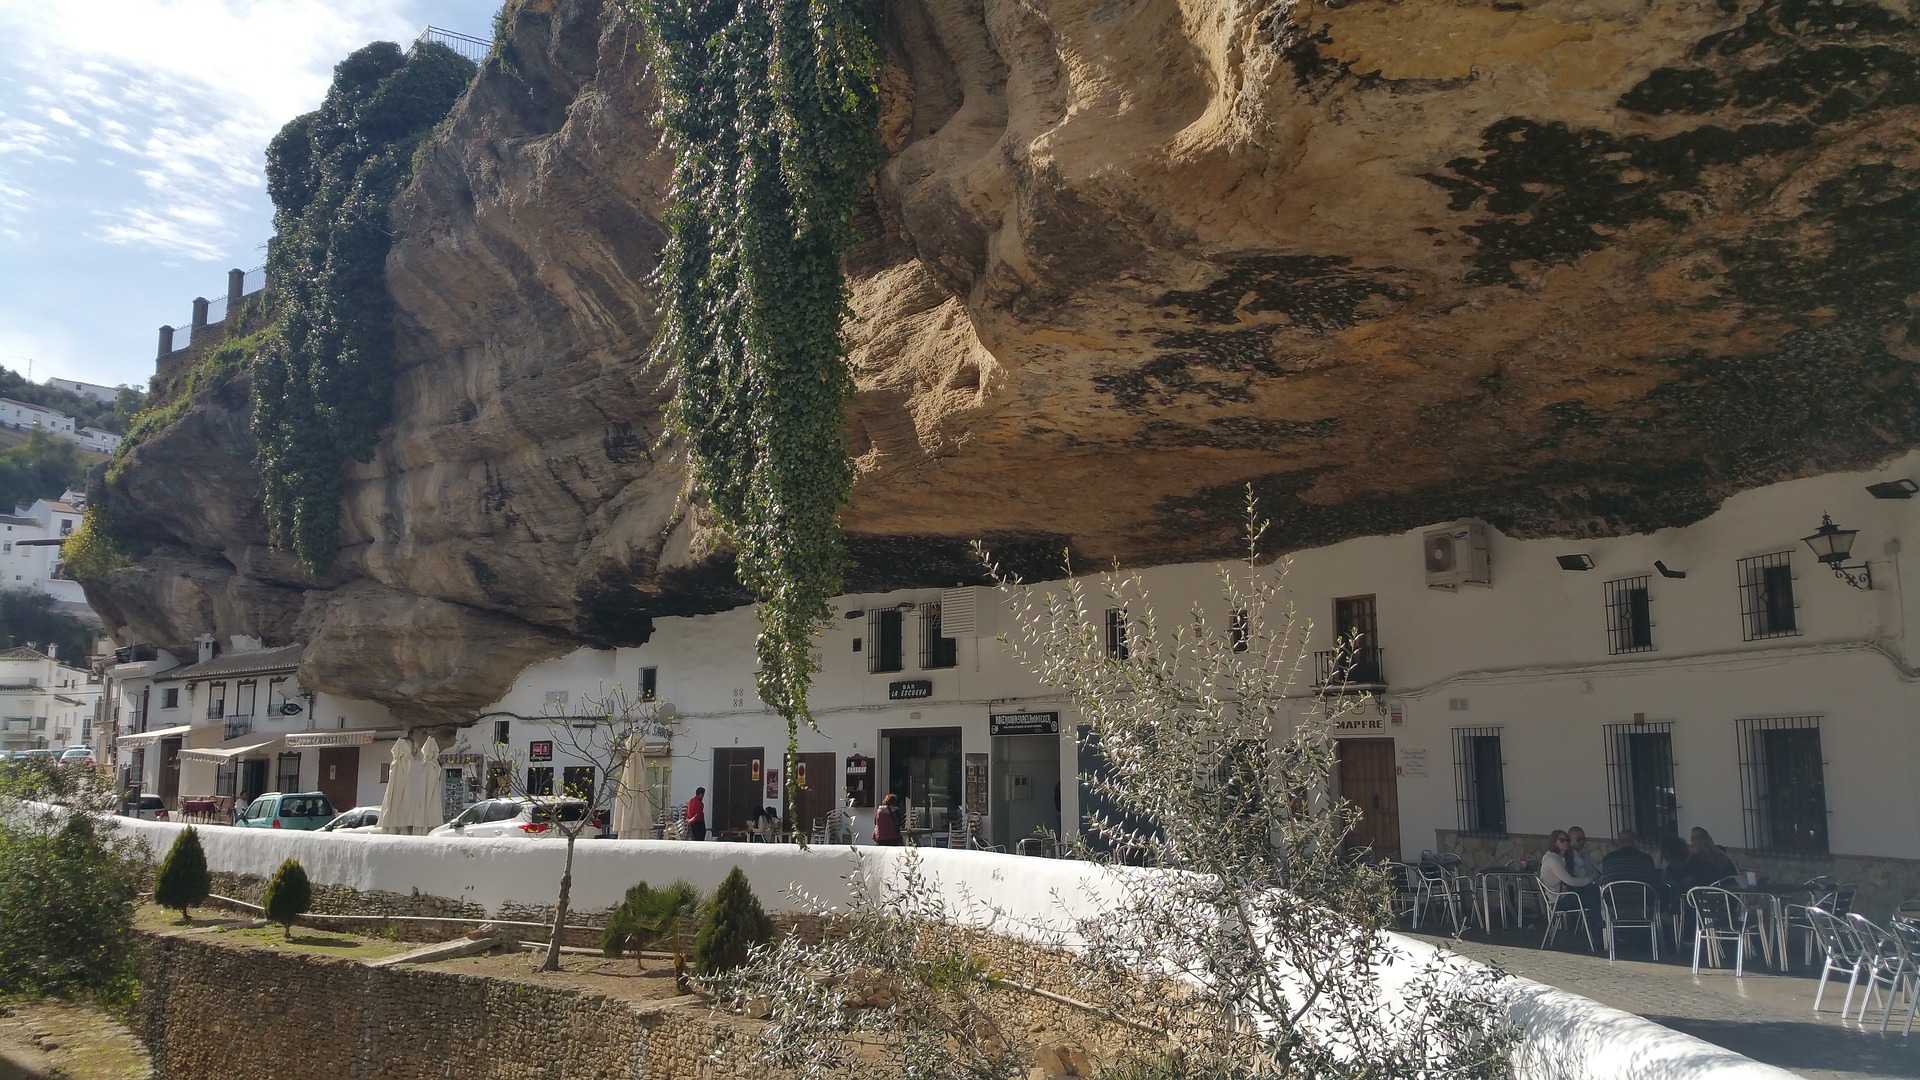 Read more about the article Setenil de las Bodegas, The Town Built under the Rock in Spain